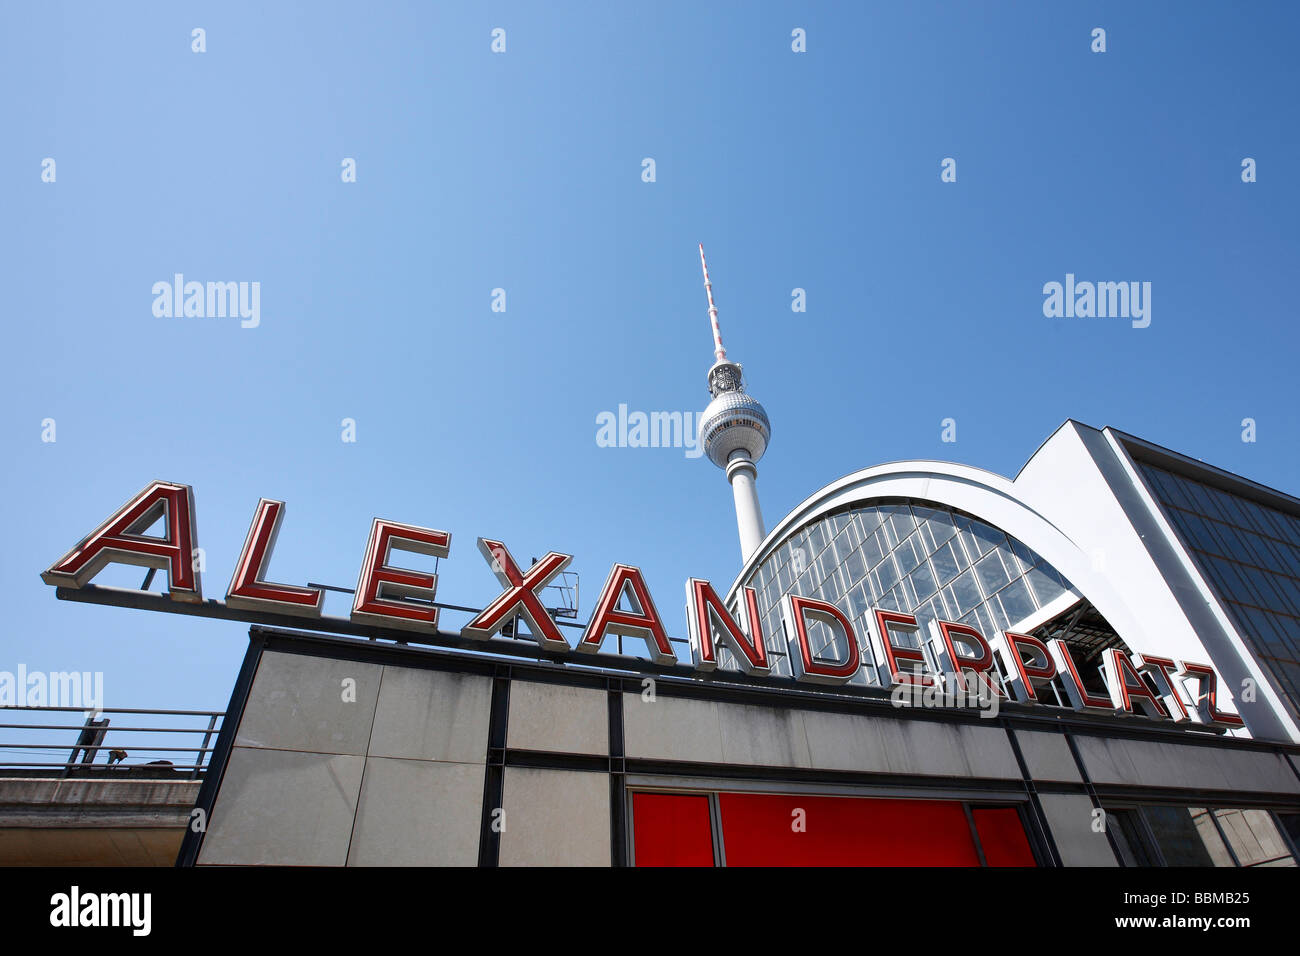 Alexanderplatz train station and Fernsehturm TV tower, Berlin, Germany, Europe Stock Photo